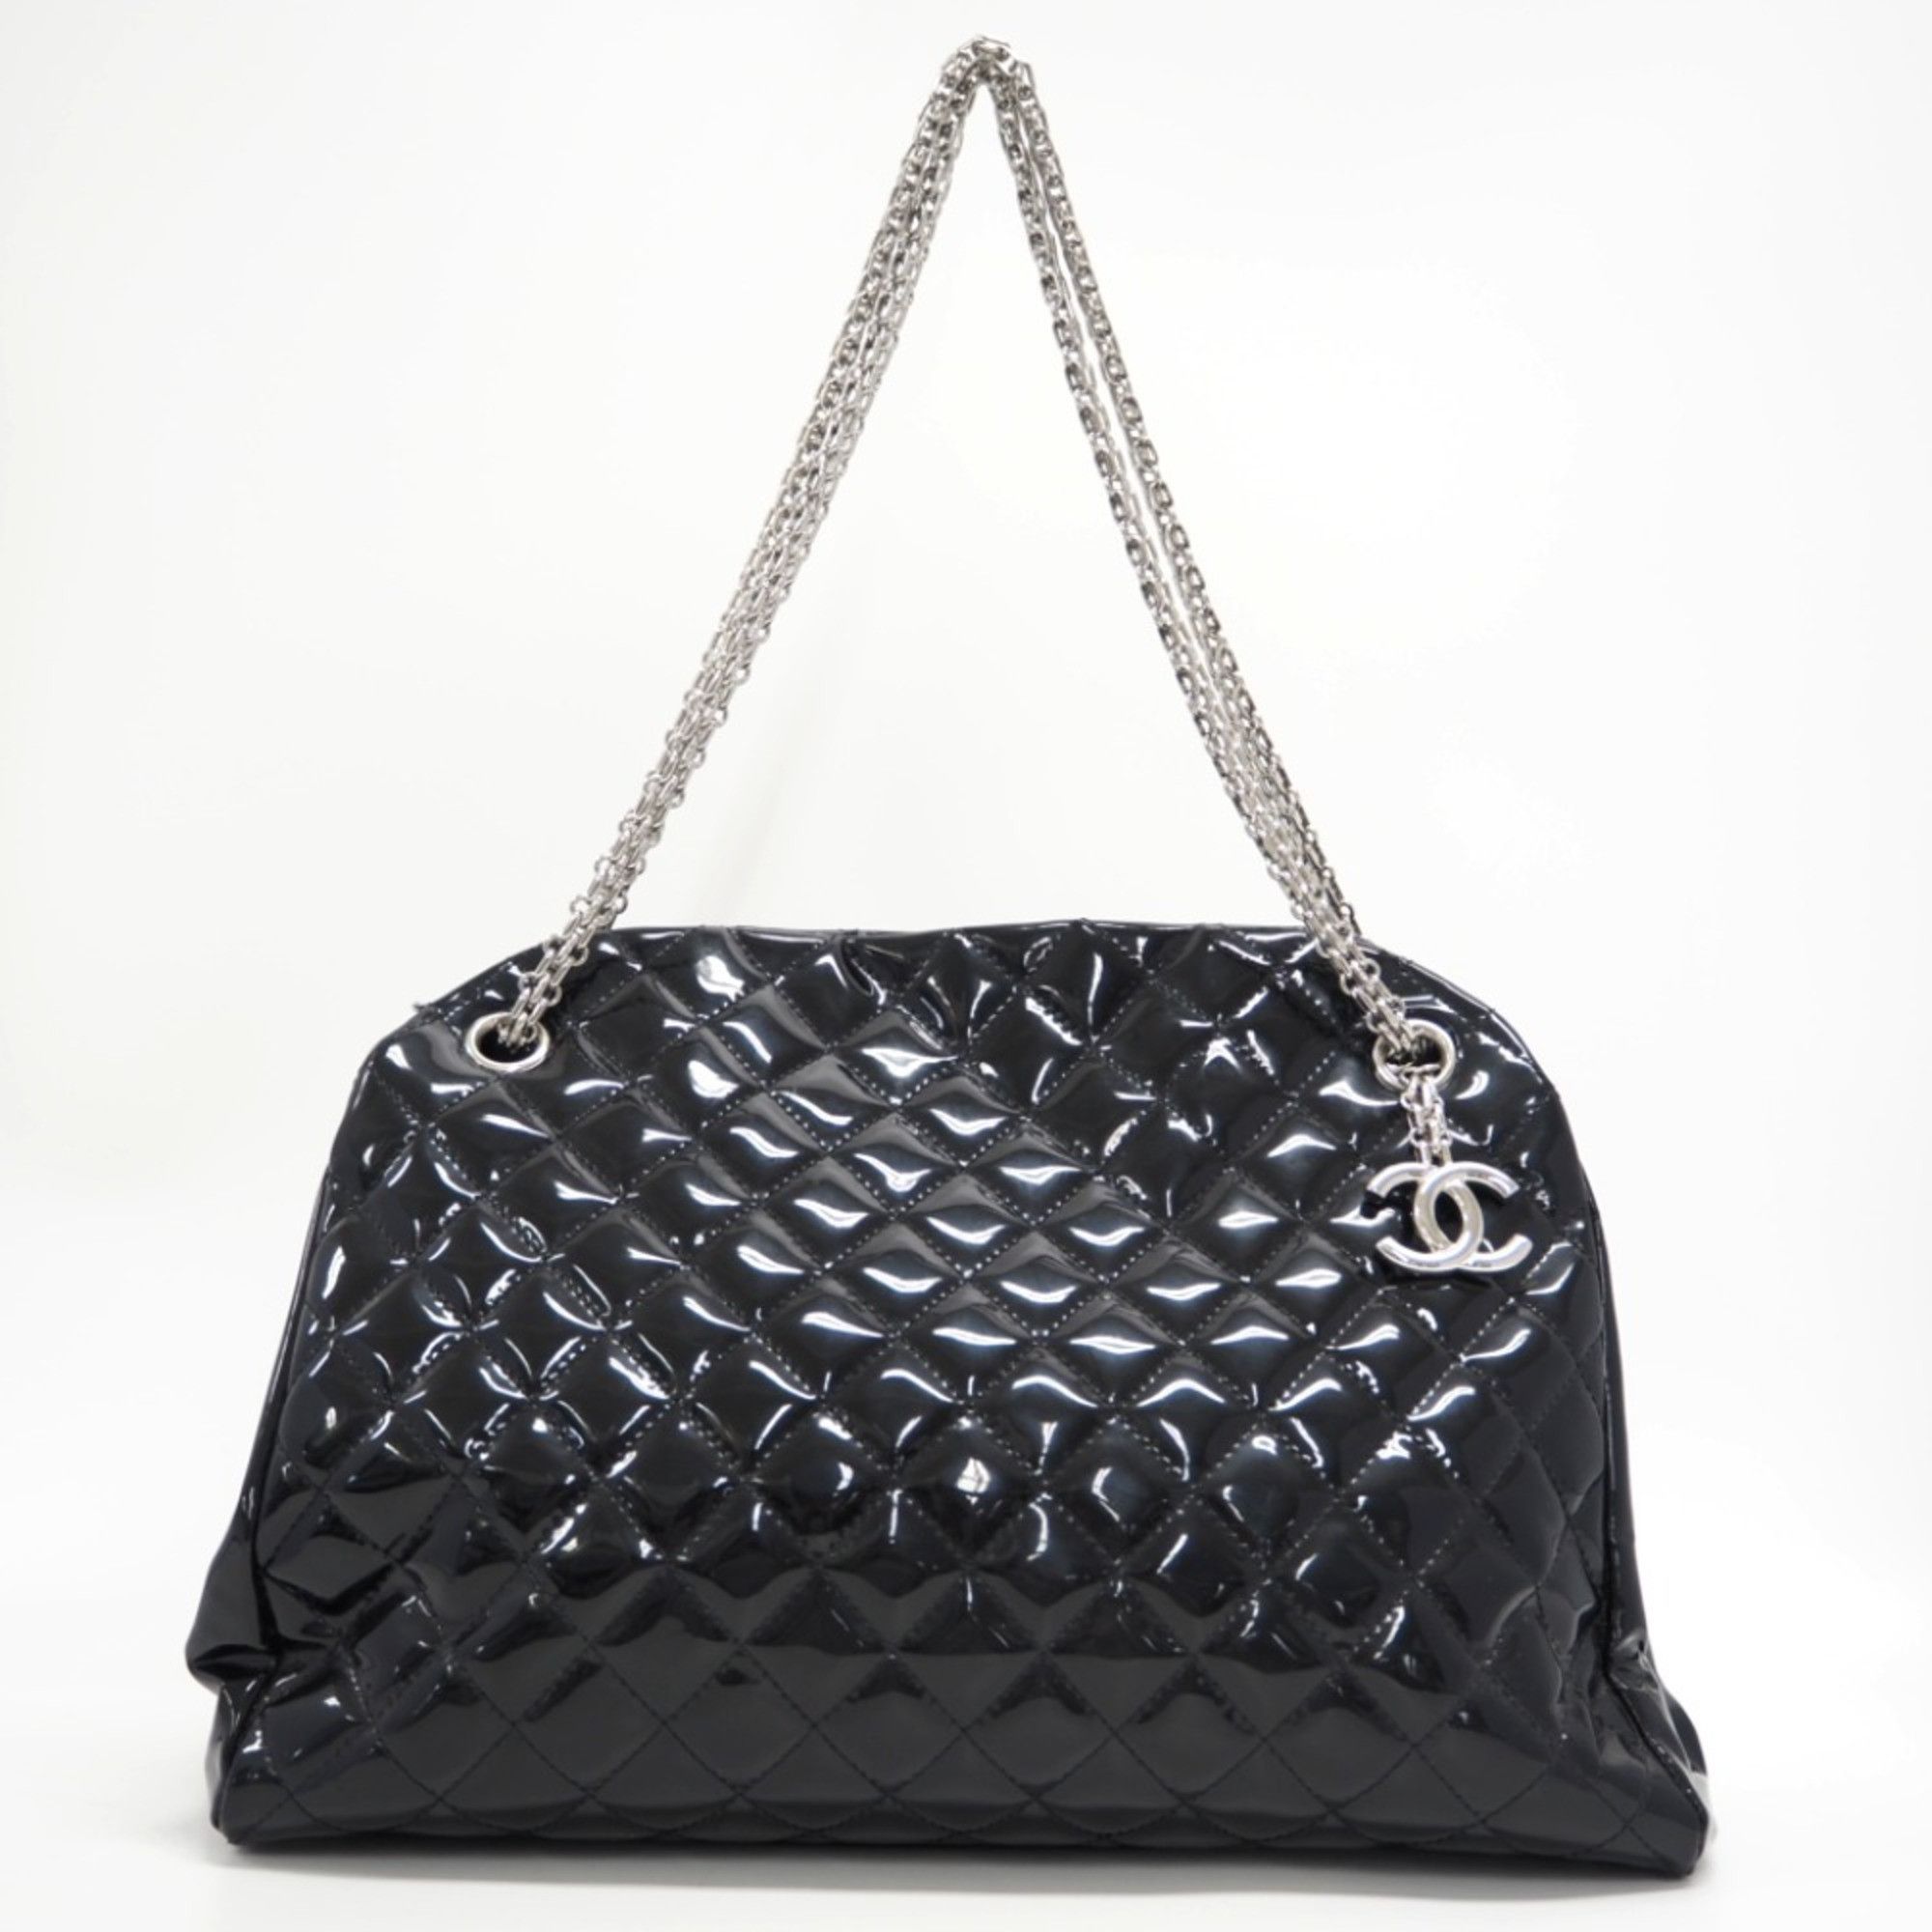 Chanel CHANEL Coco Mark Chain Shoulder Bag No. 14 Matelasse Black